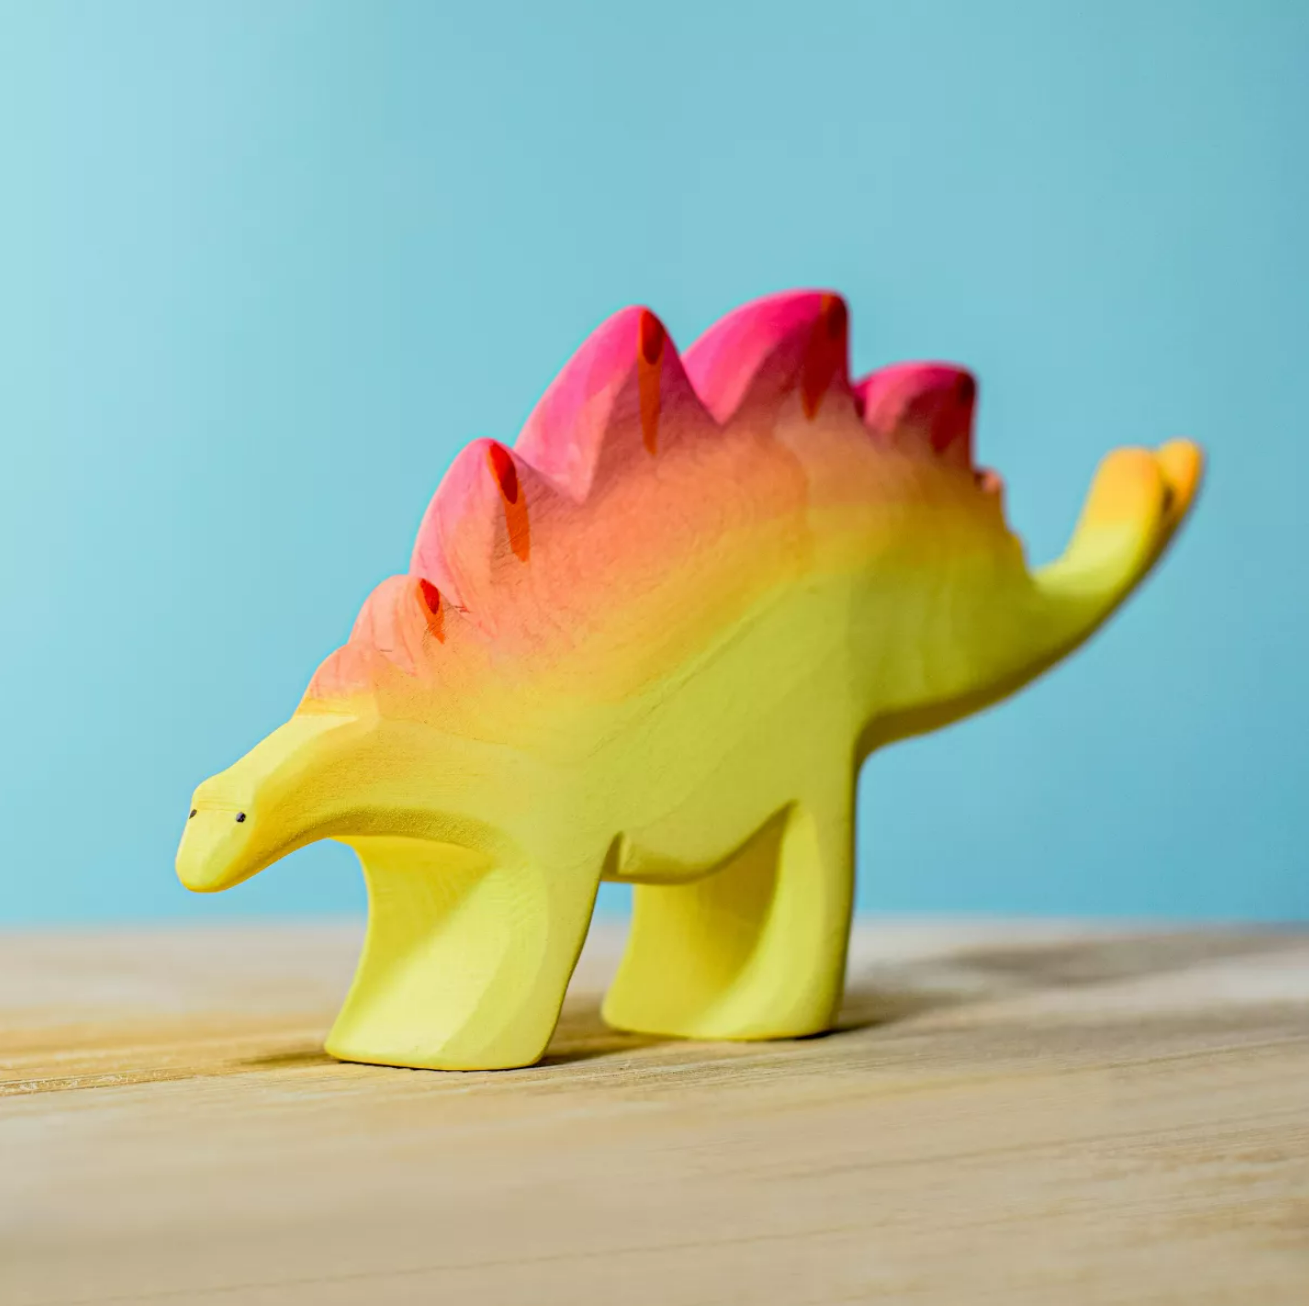 Bumbu Toys Wooden Stegosaurus Dinosaur